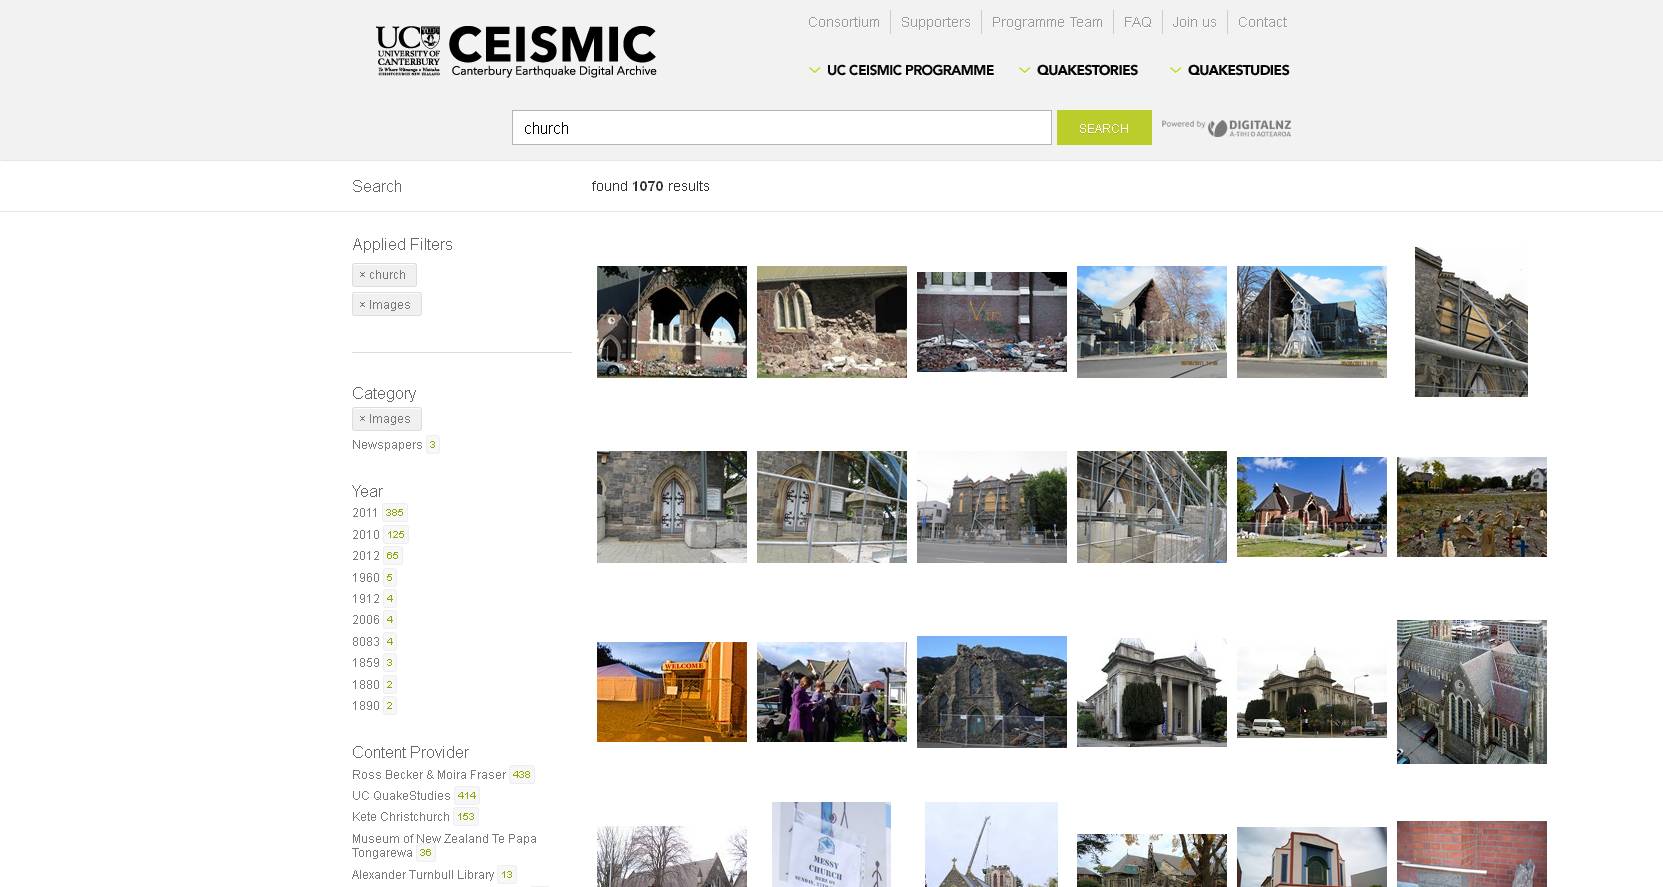 Thumbnail images of earthquake damaged churches.